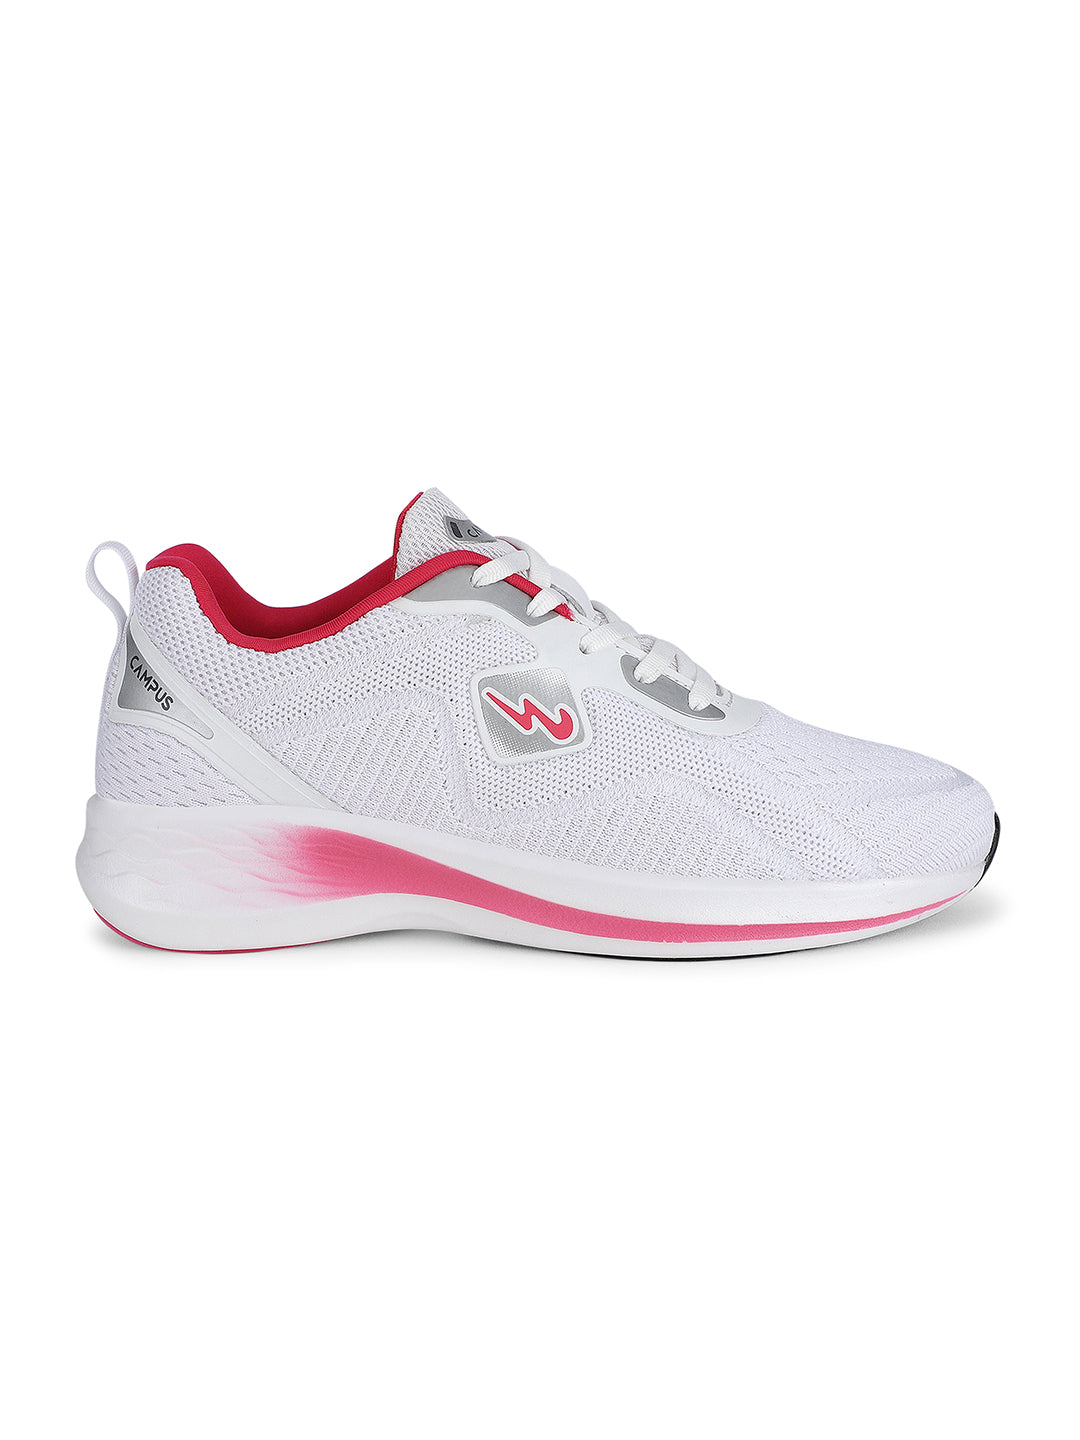 Women's Air Cushion Sport Running Shoes Breathable Mesh Walking Slip-On  Sneakers | eBay